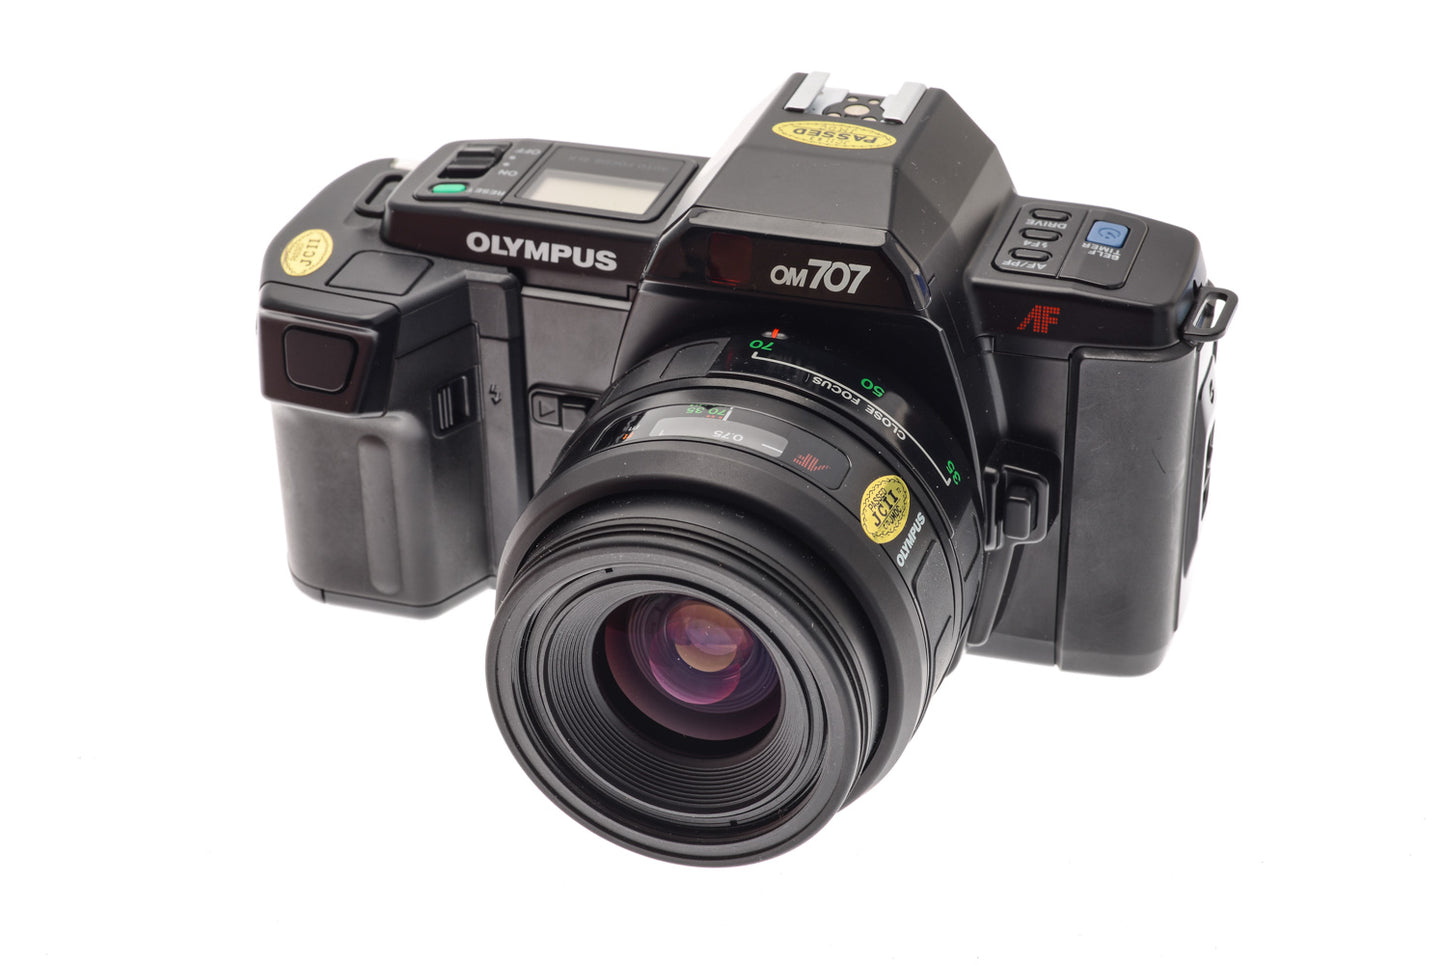 Olympus OM707 - Camera